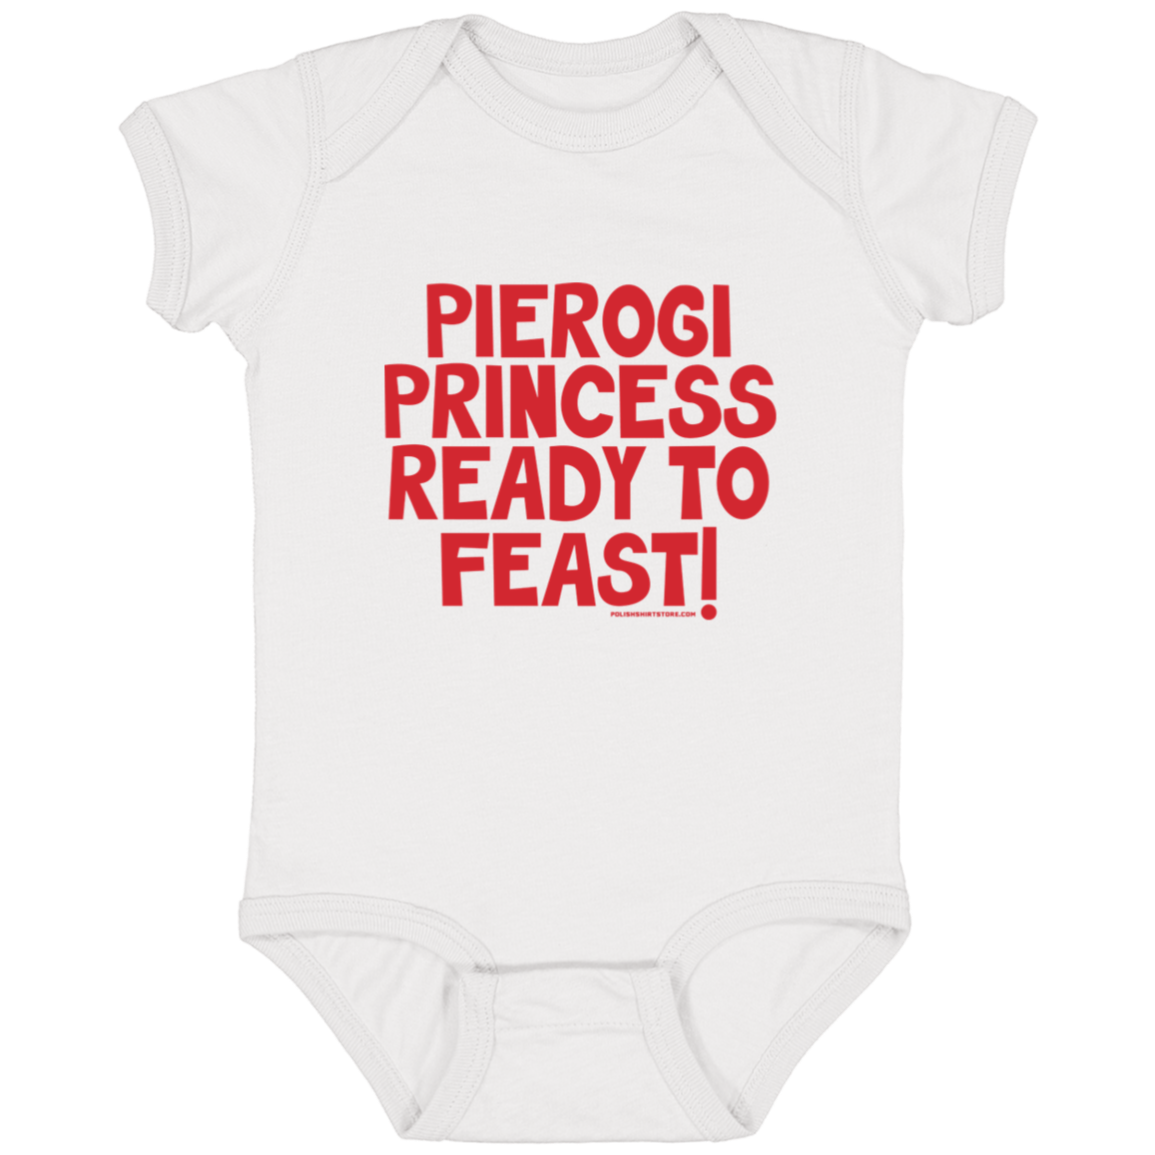 Pierogi Princess Ready To Feast Infant Bodysuit Baby CustomCat White Newborn 